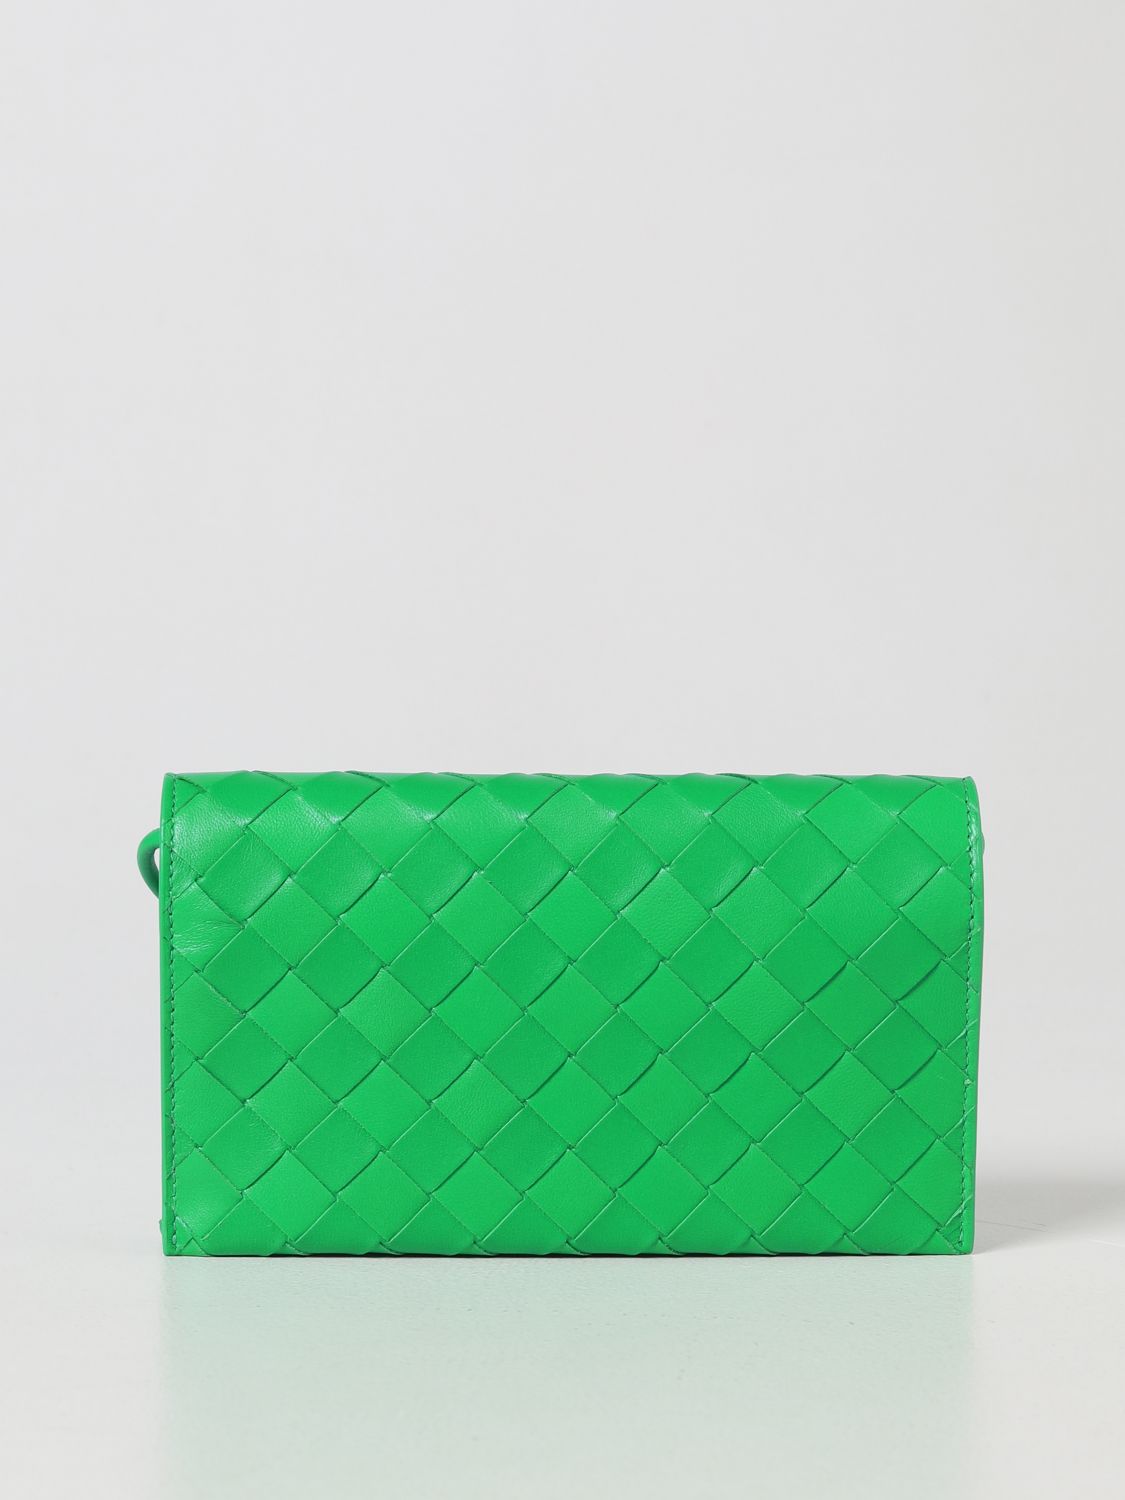 Bottega Veneta Woven Leather Shoulder Bag In Green